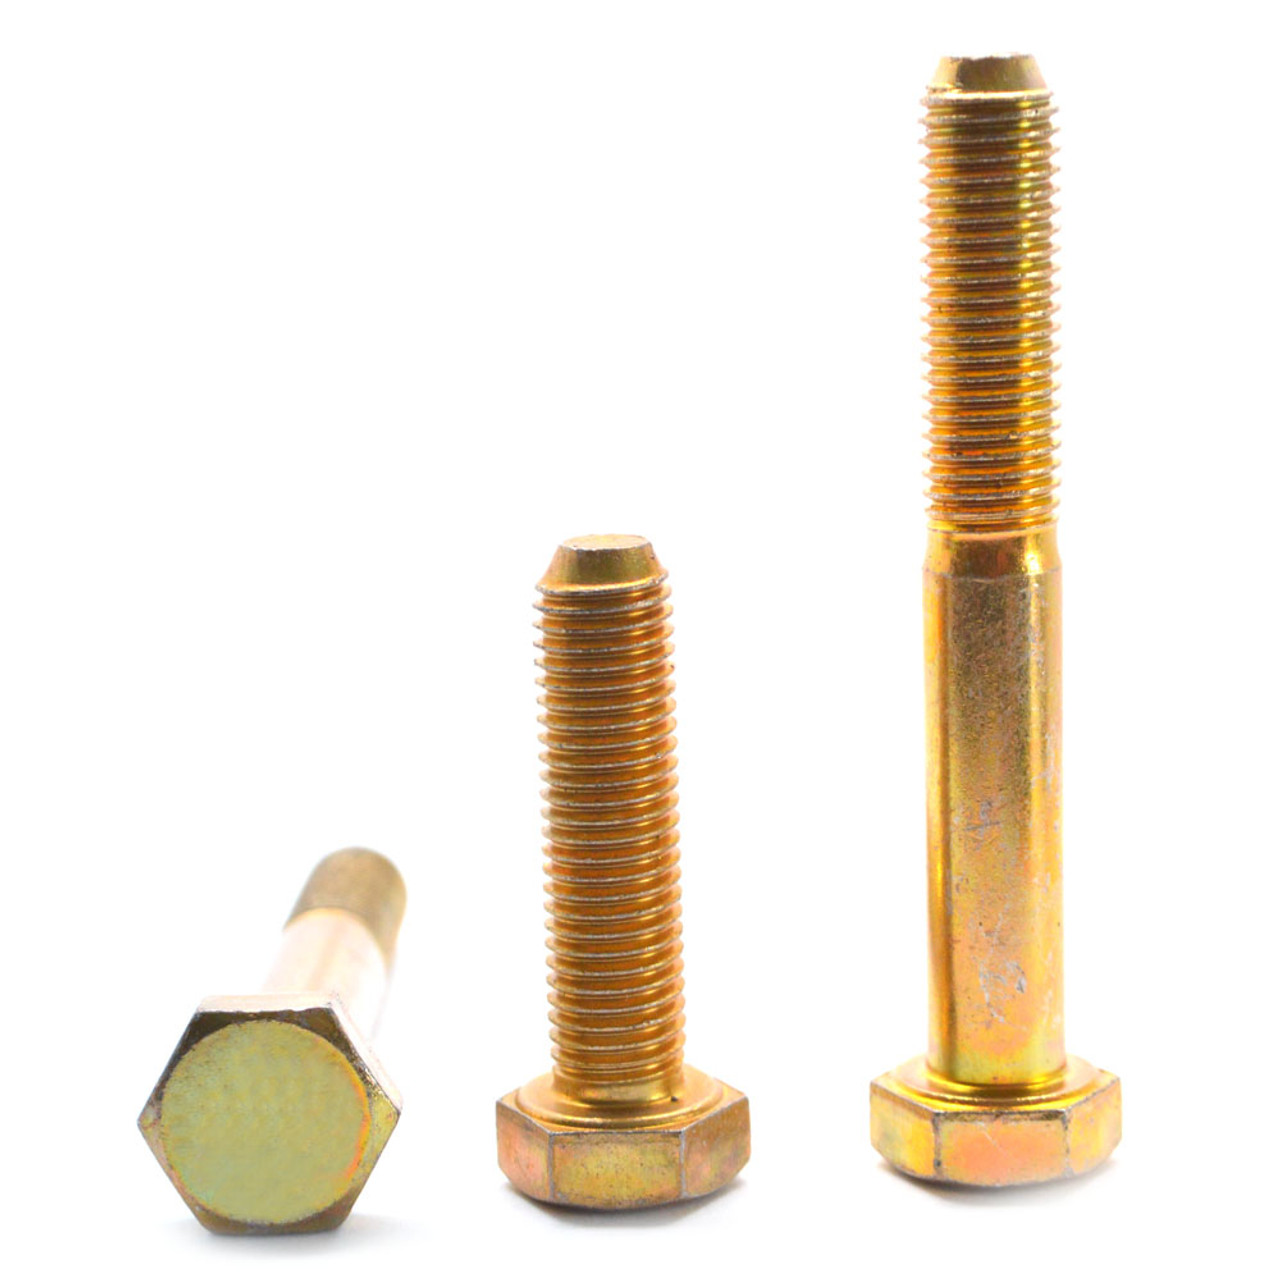 M14 x 2.00 x 60 MM (PT) Coarse Thread DIN 931 Class 10.9 Hex Cap Screw (Bolt) Alloy Steel Yellow Zinc Plated